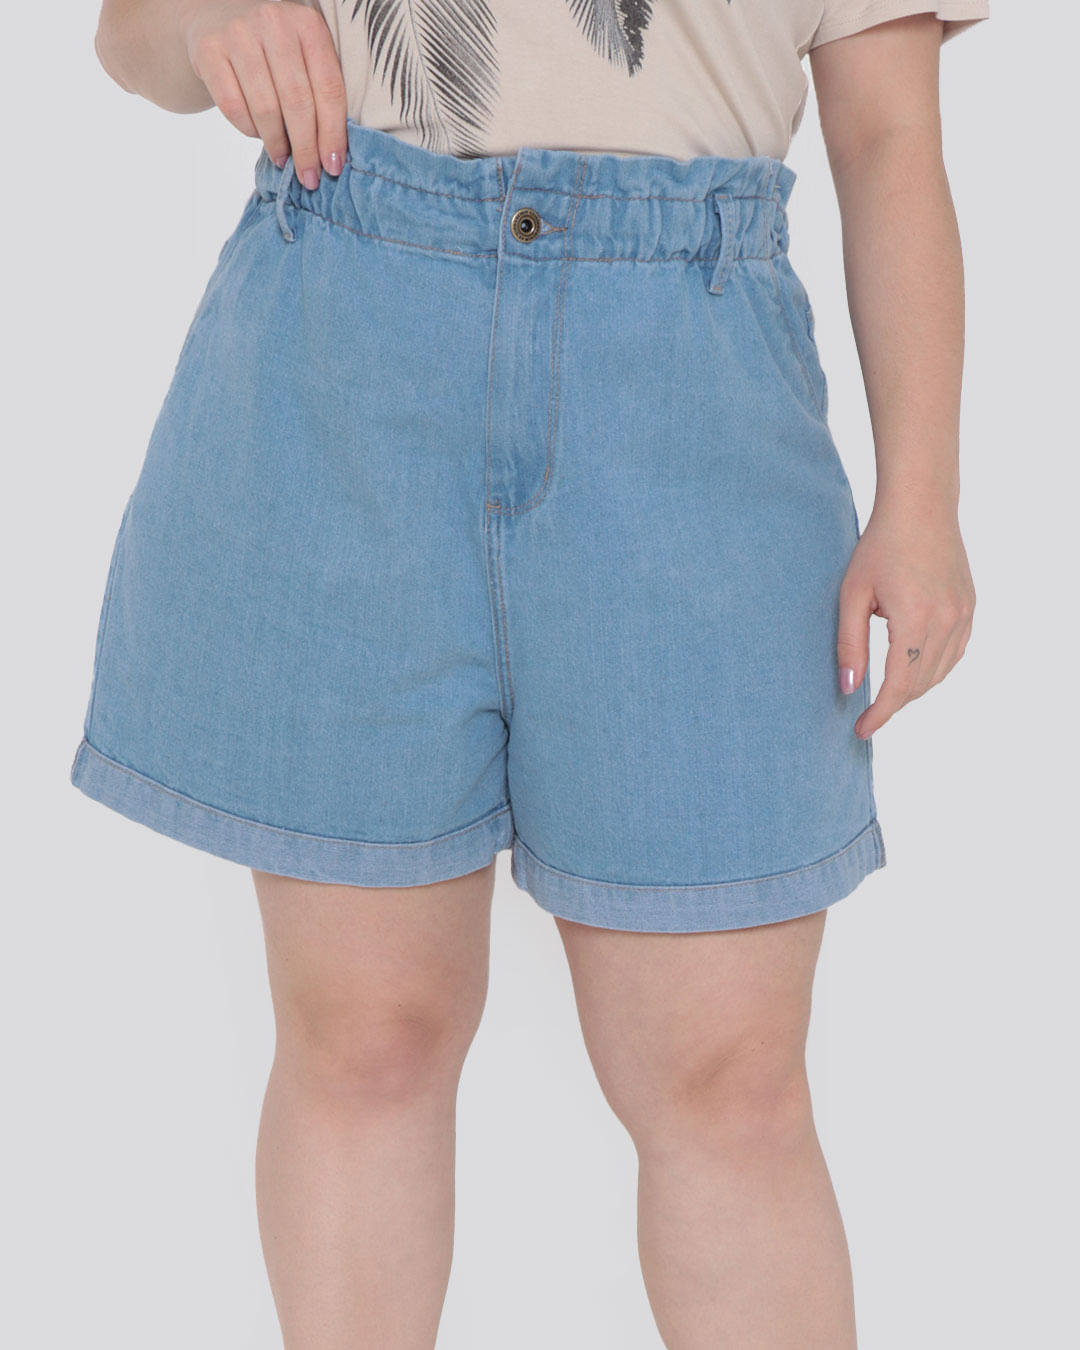 Short Jeans Feminino Plus Size Clochard Azul